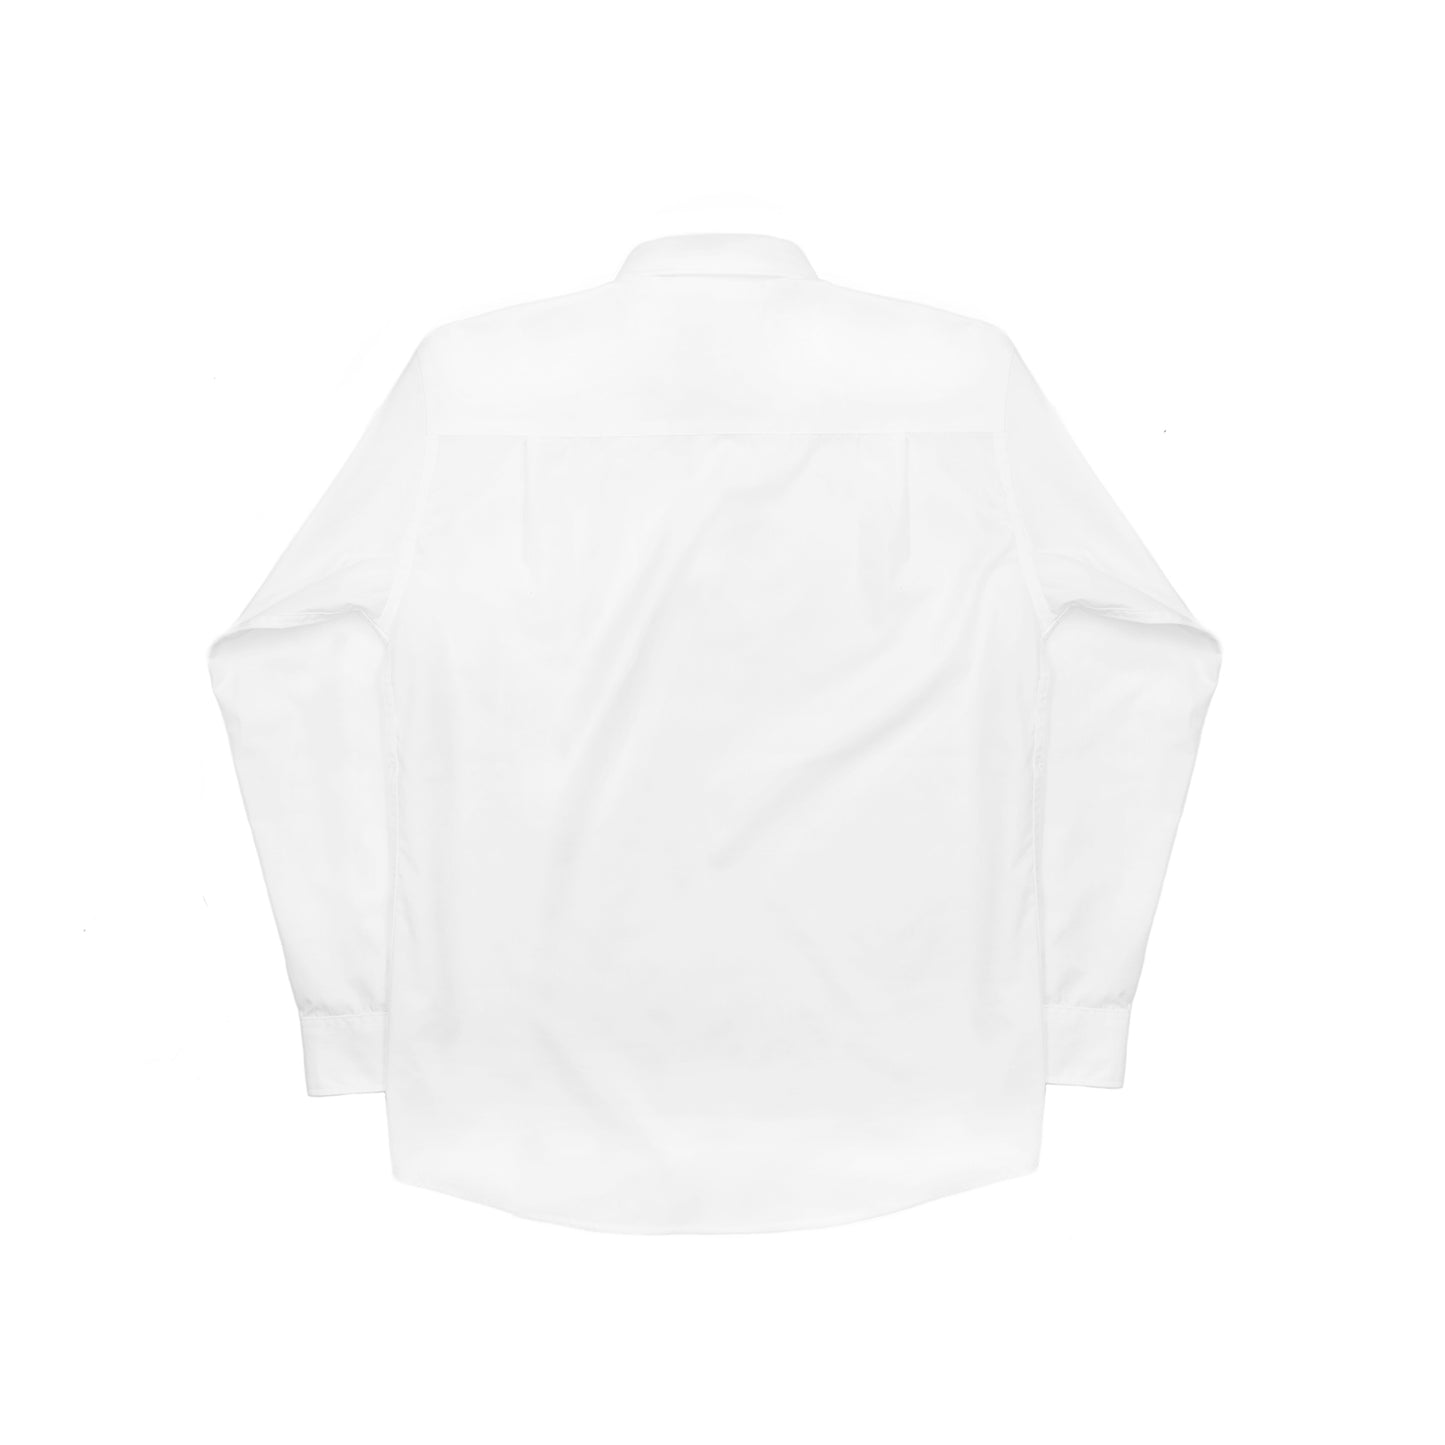 White Button Shirt LS